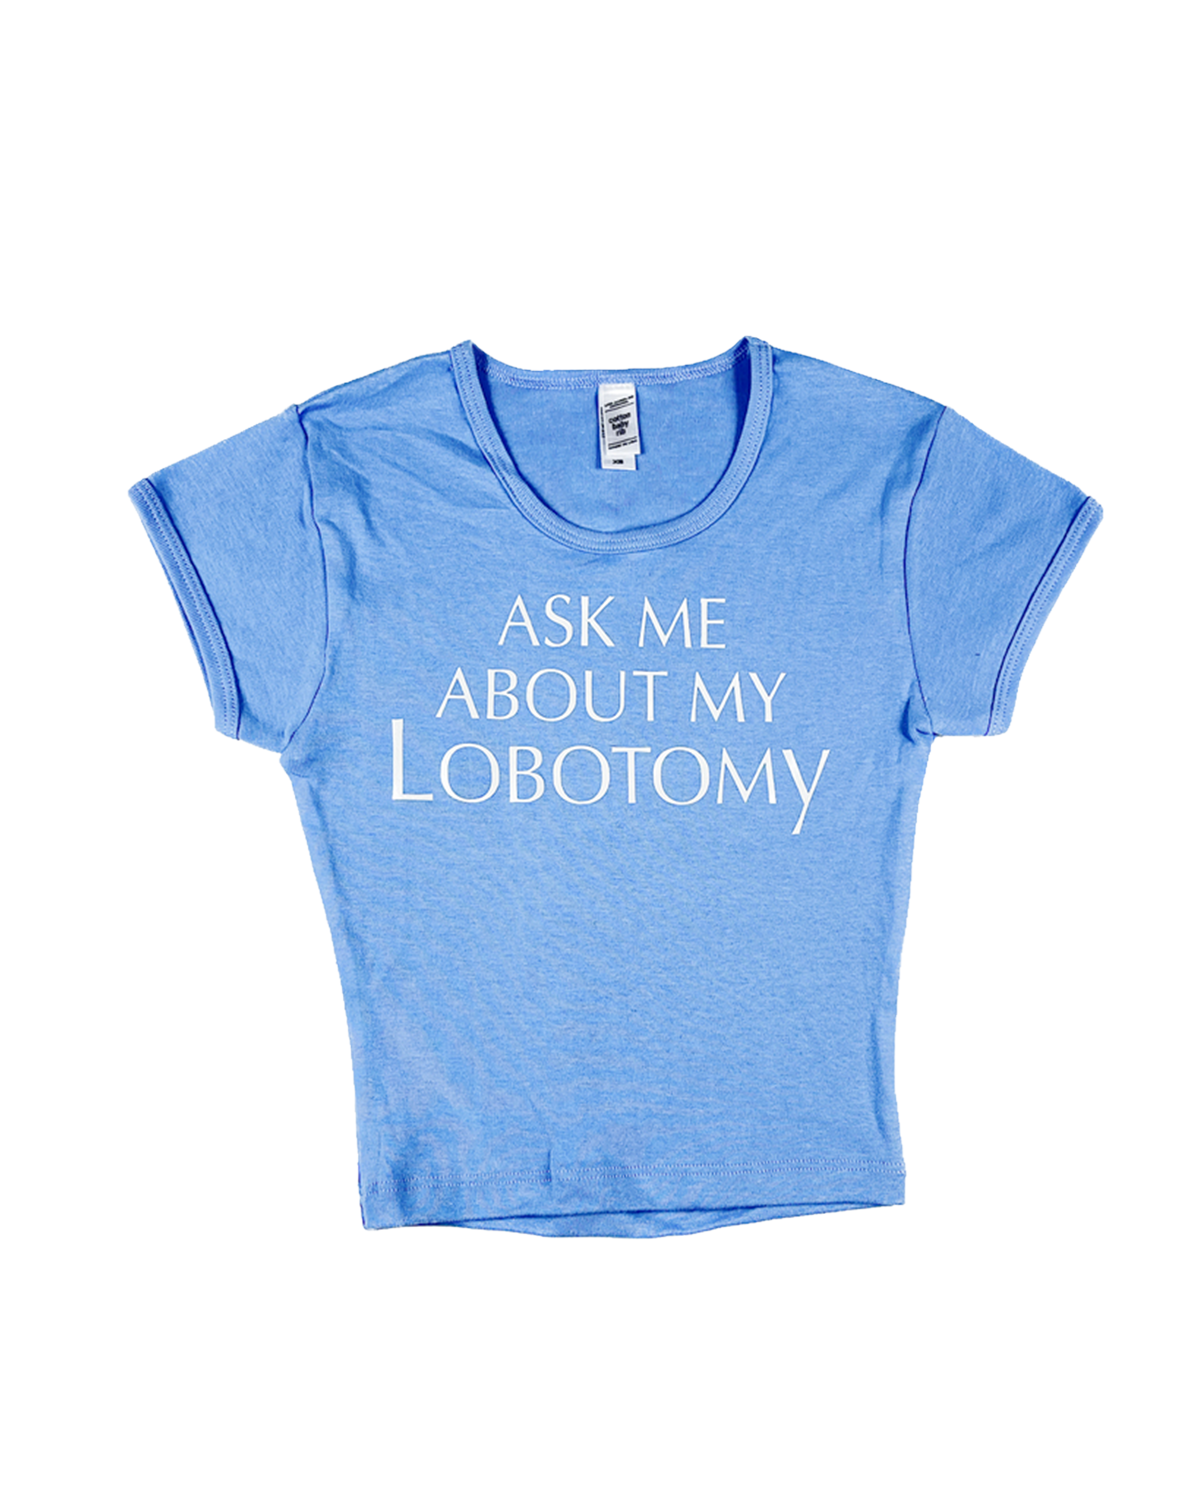 Lobotomy Baby Tee